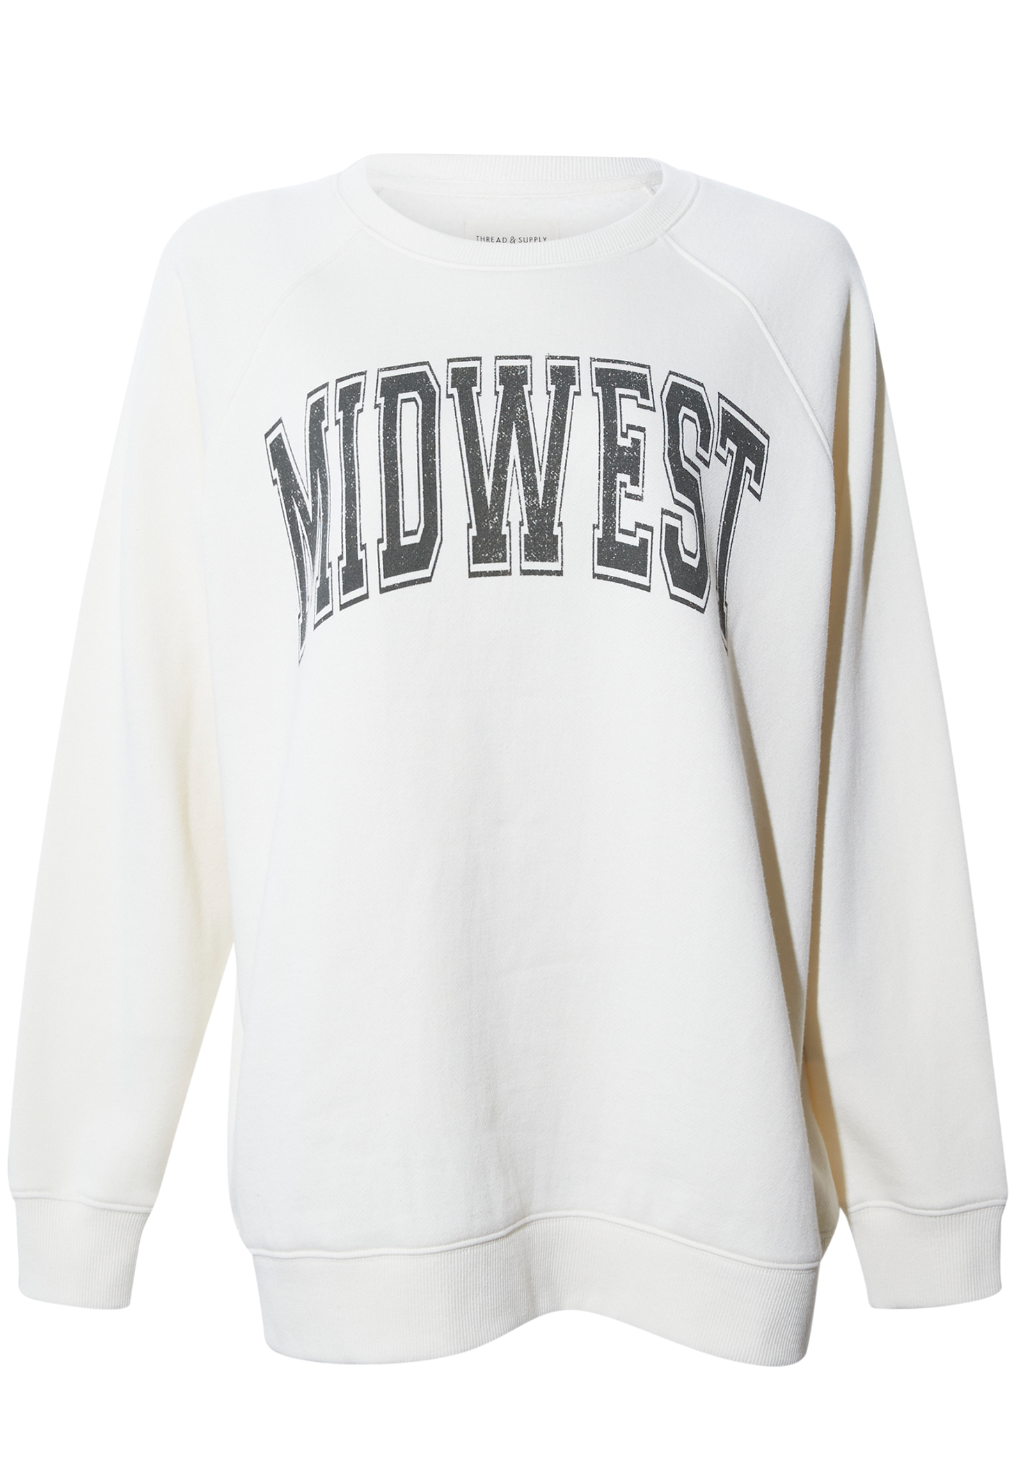 T&S Midwest Sweatshirt-Crm